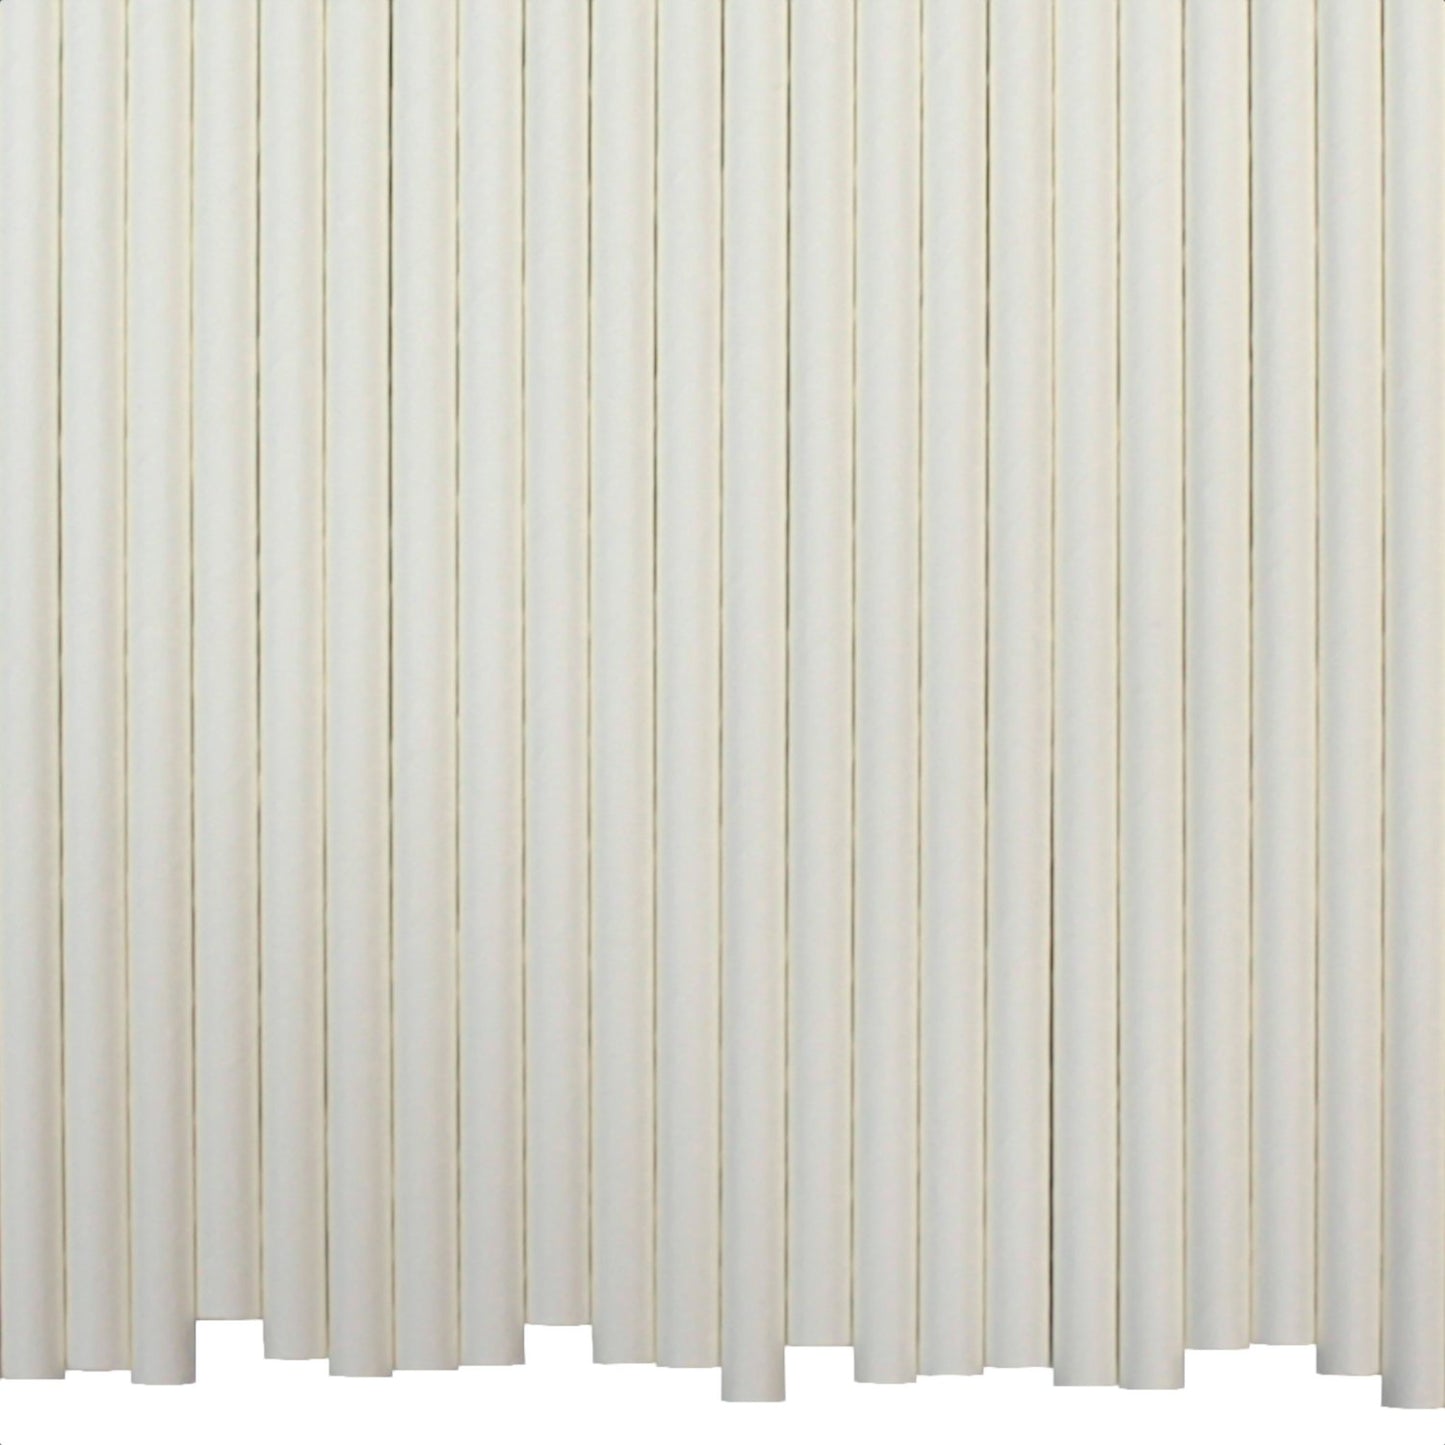 White Paper Straws (6mm x 200mm) - Quality Drinking Straws - Intrinsic Paper Straws